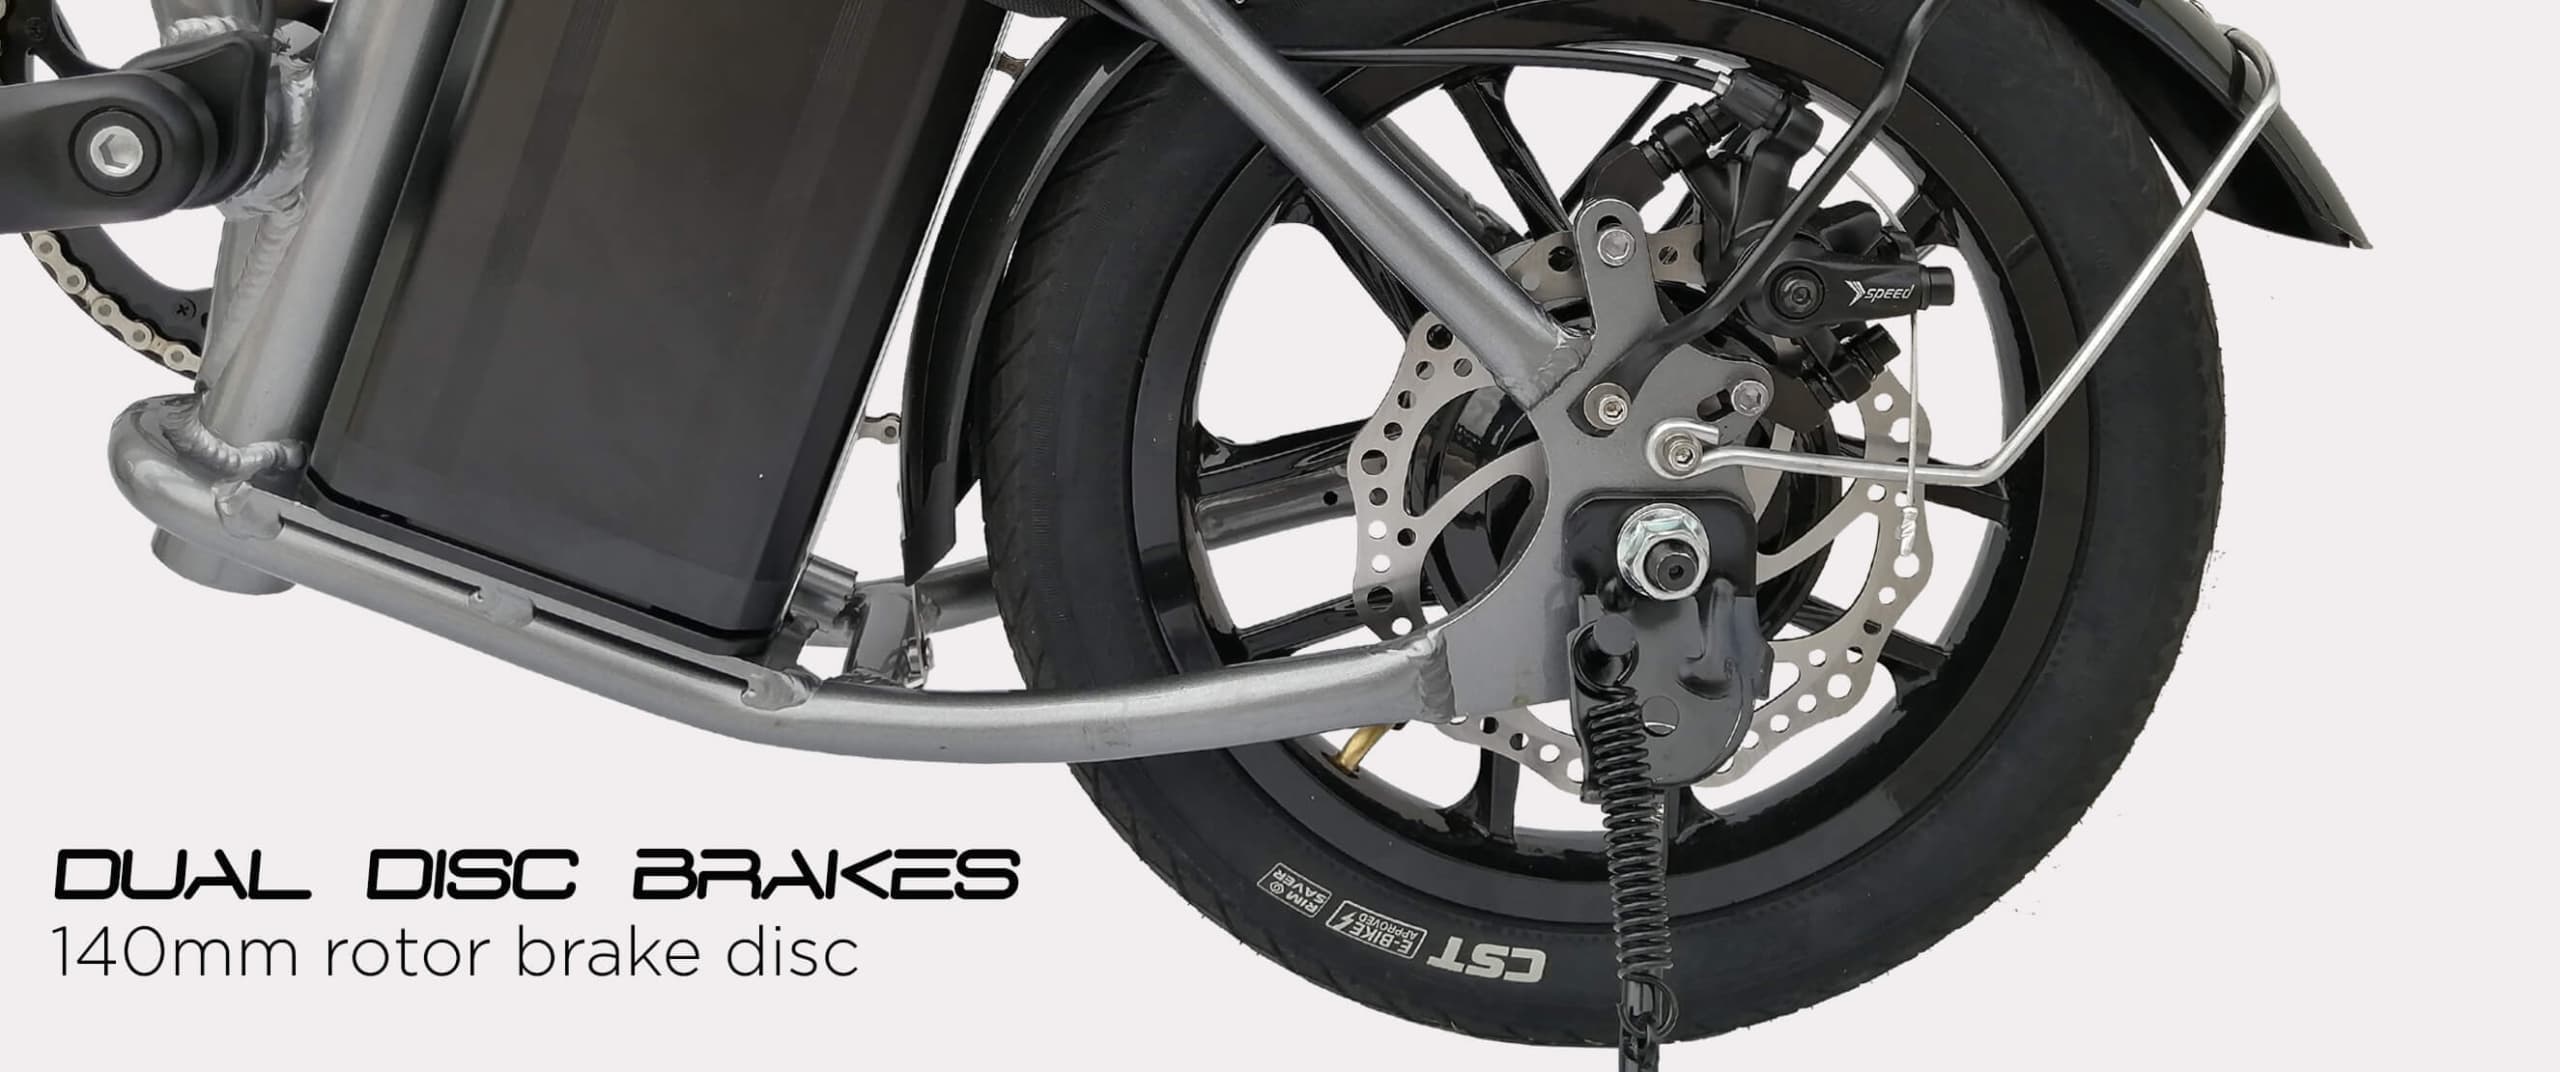 JI-MOVE MC LTA approved ebike dual disc brakes